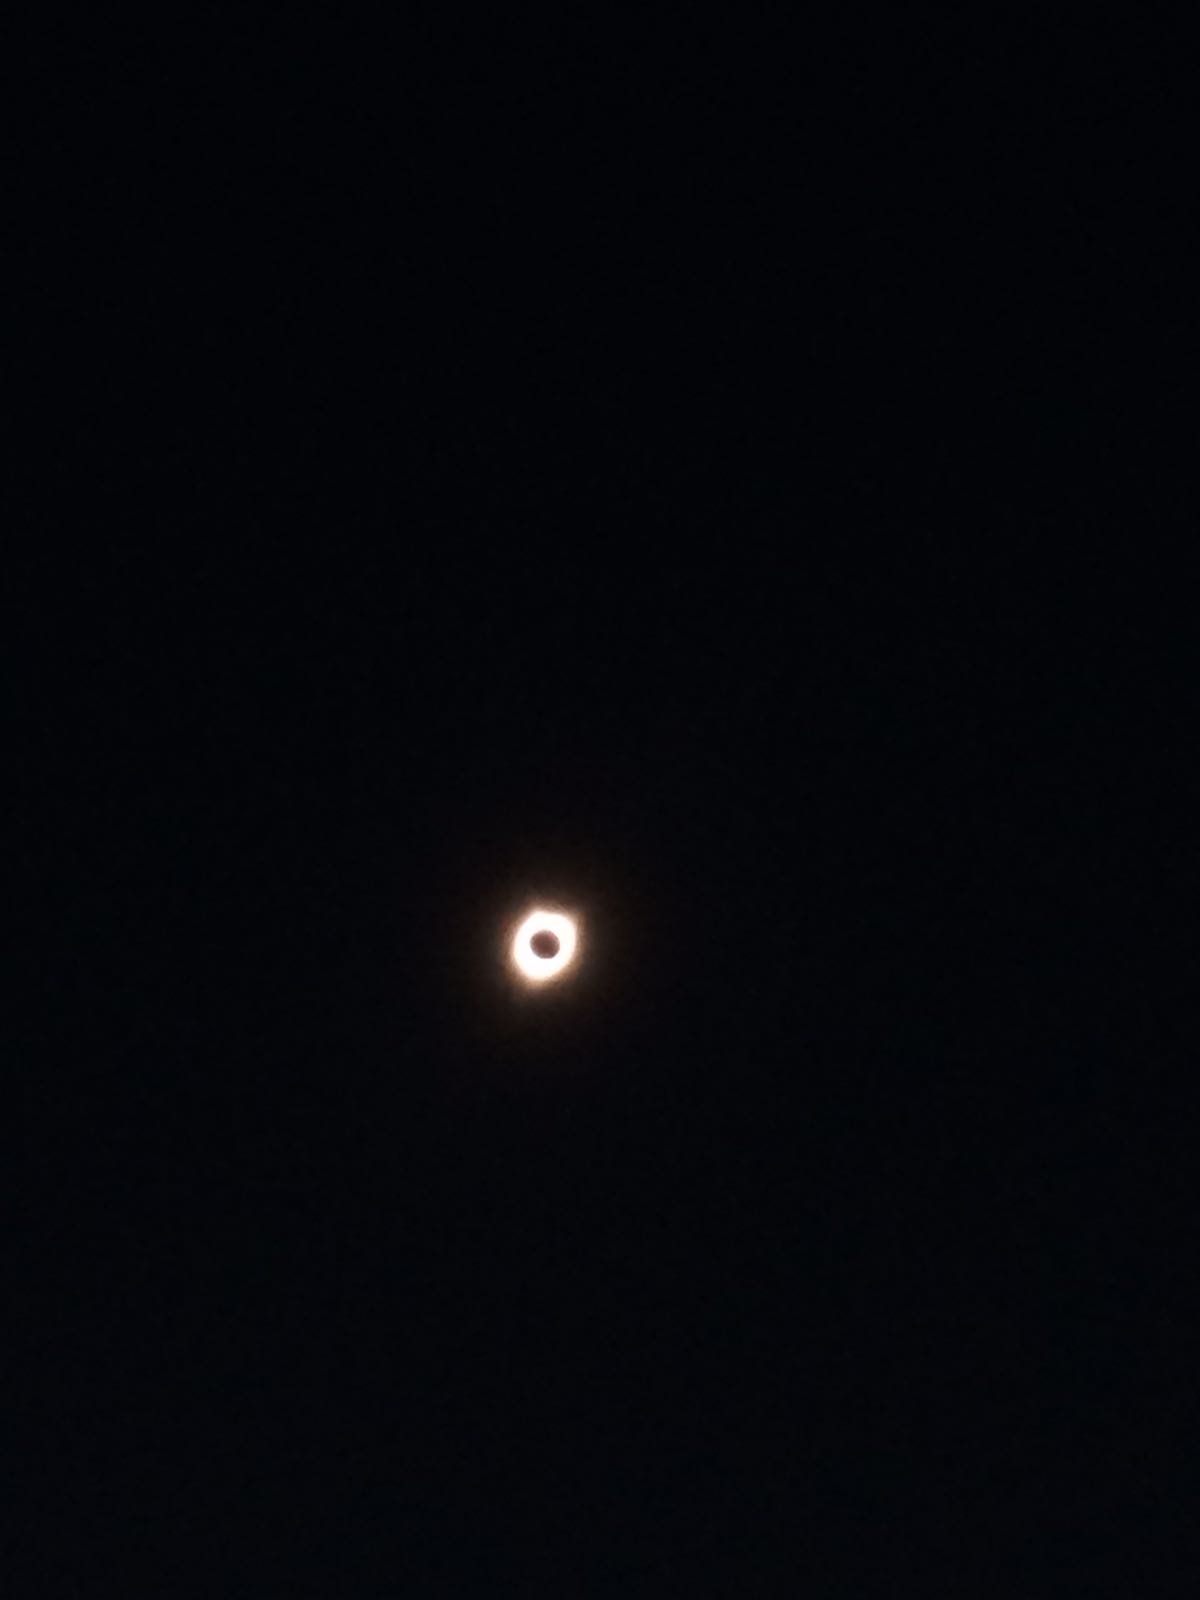 eclipse solar agosto 2017 08 21 photo 00001643